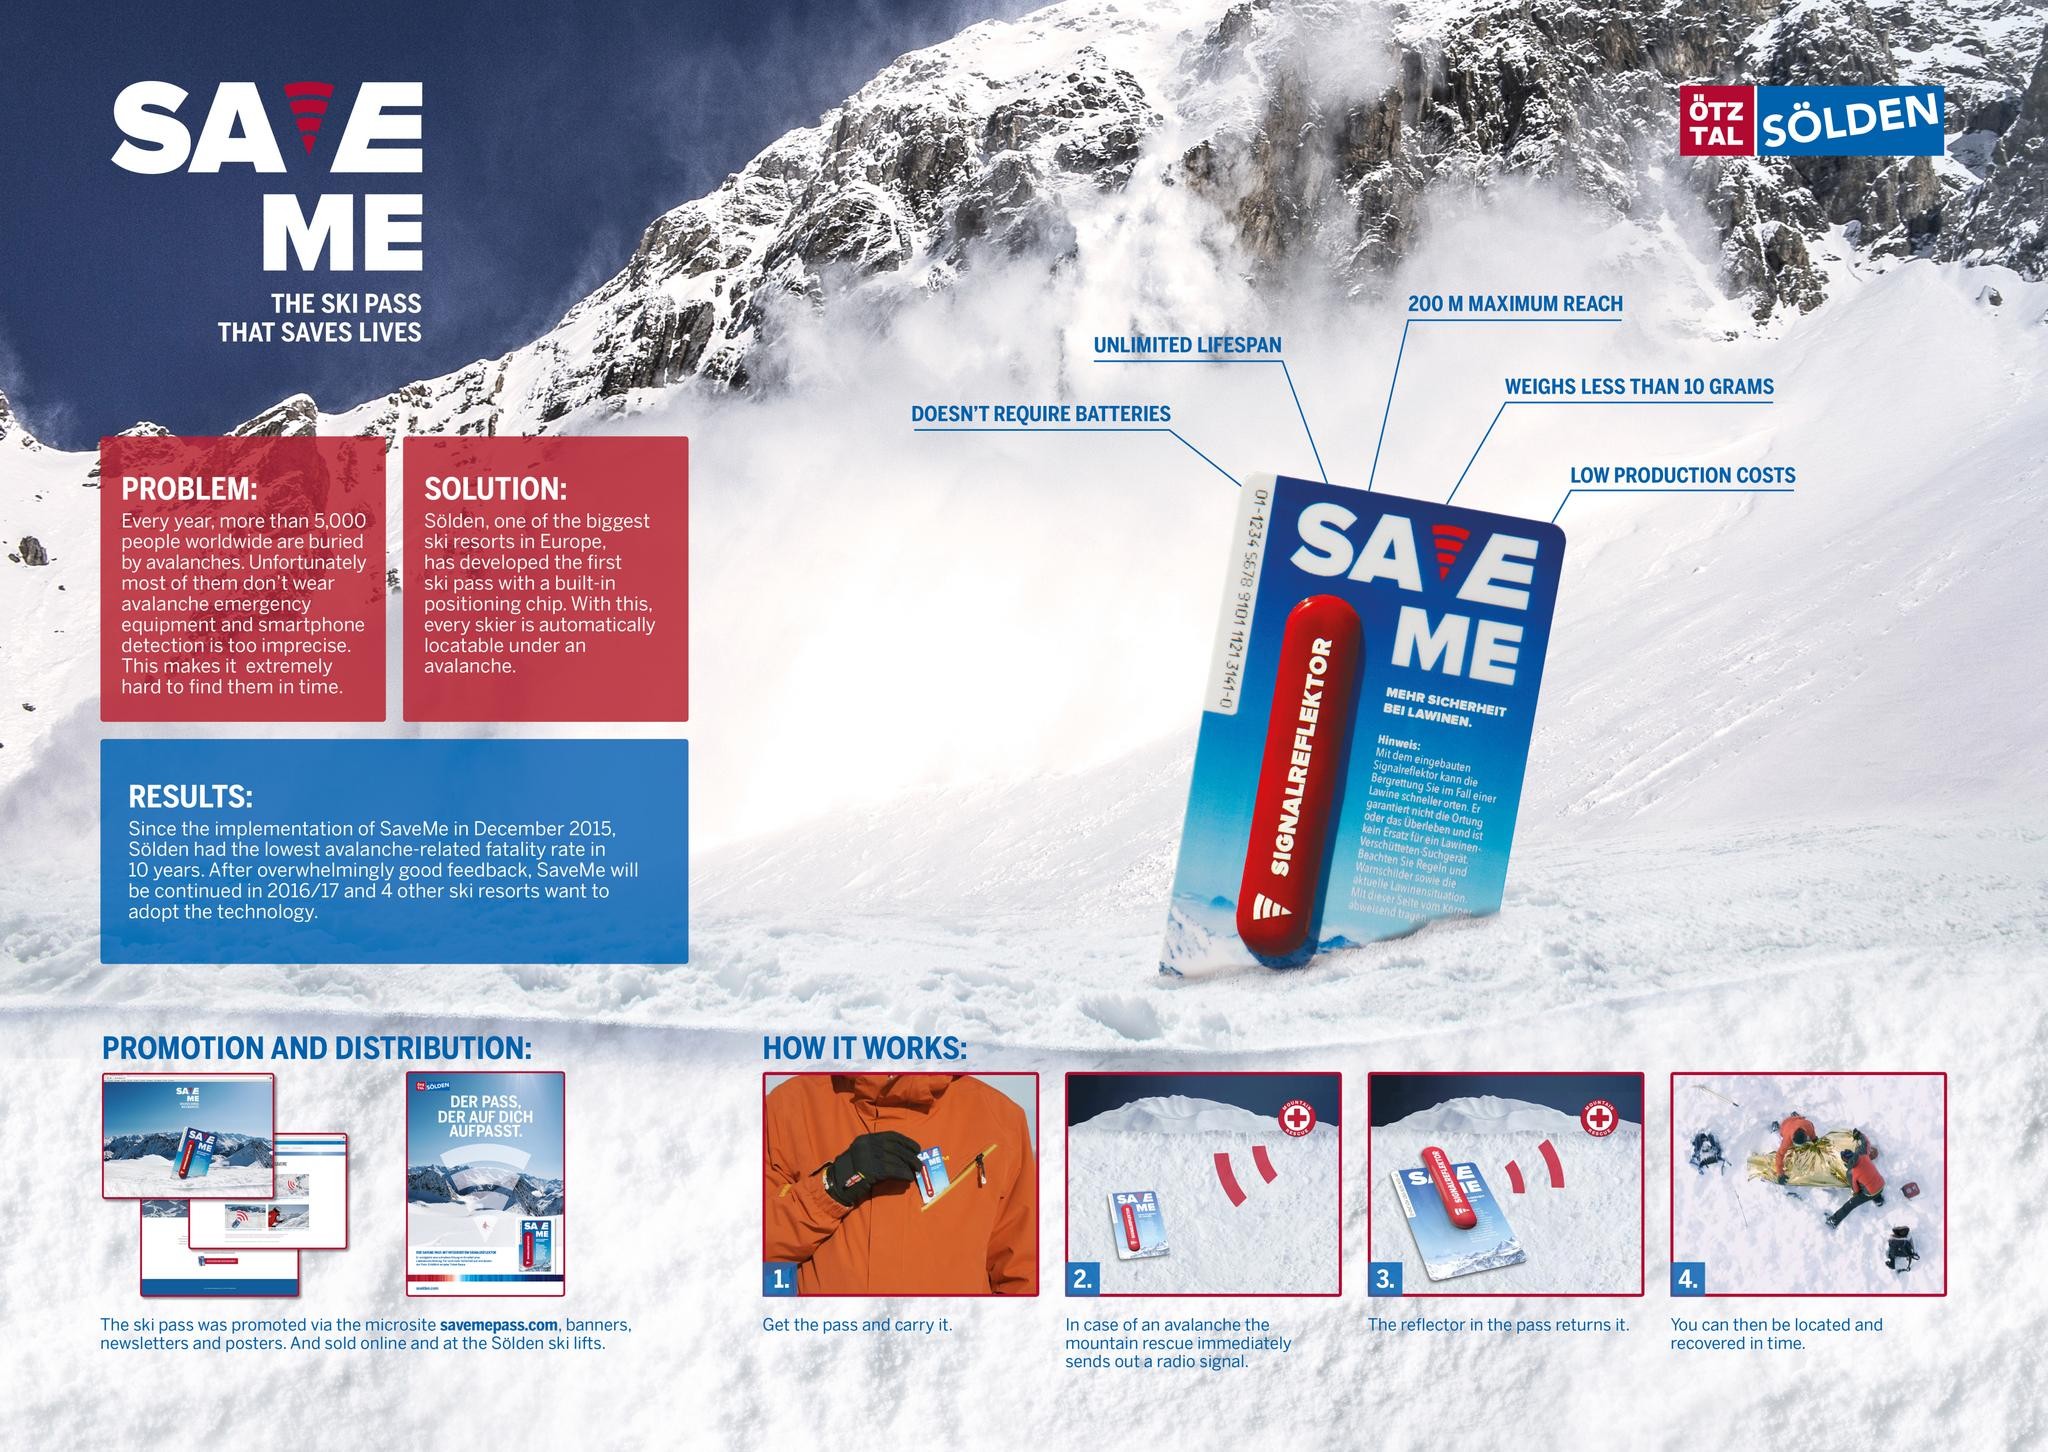 Save me – the ski pass that saves lives